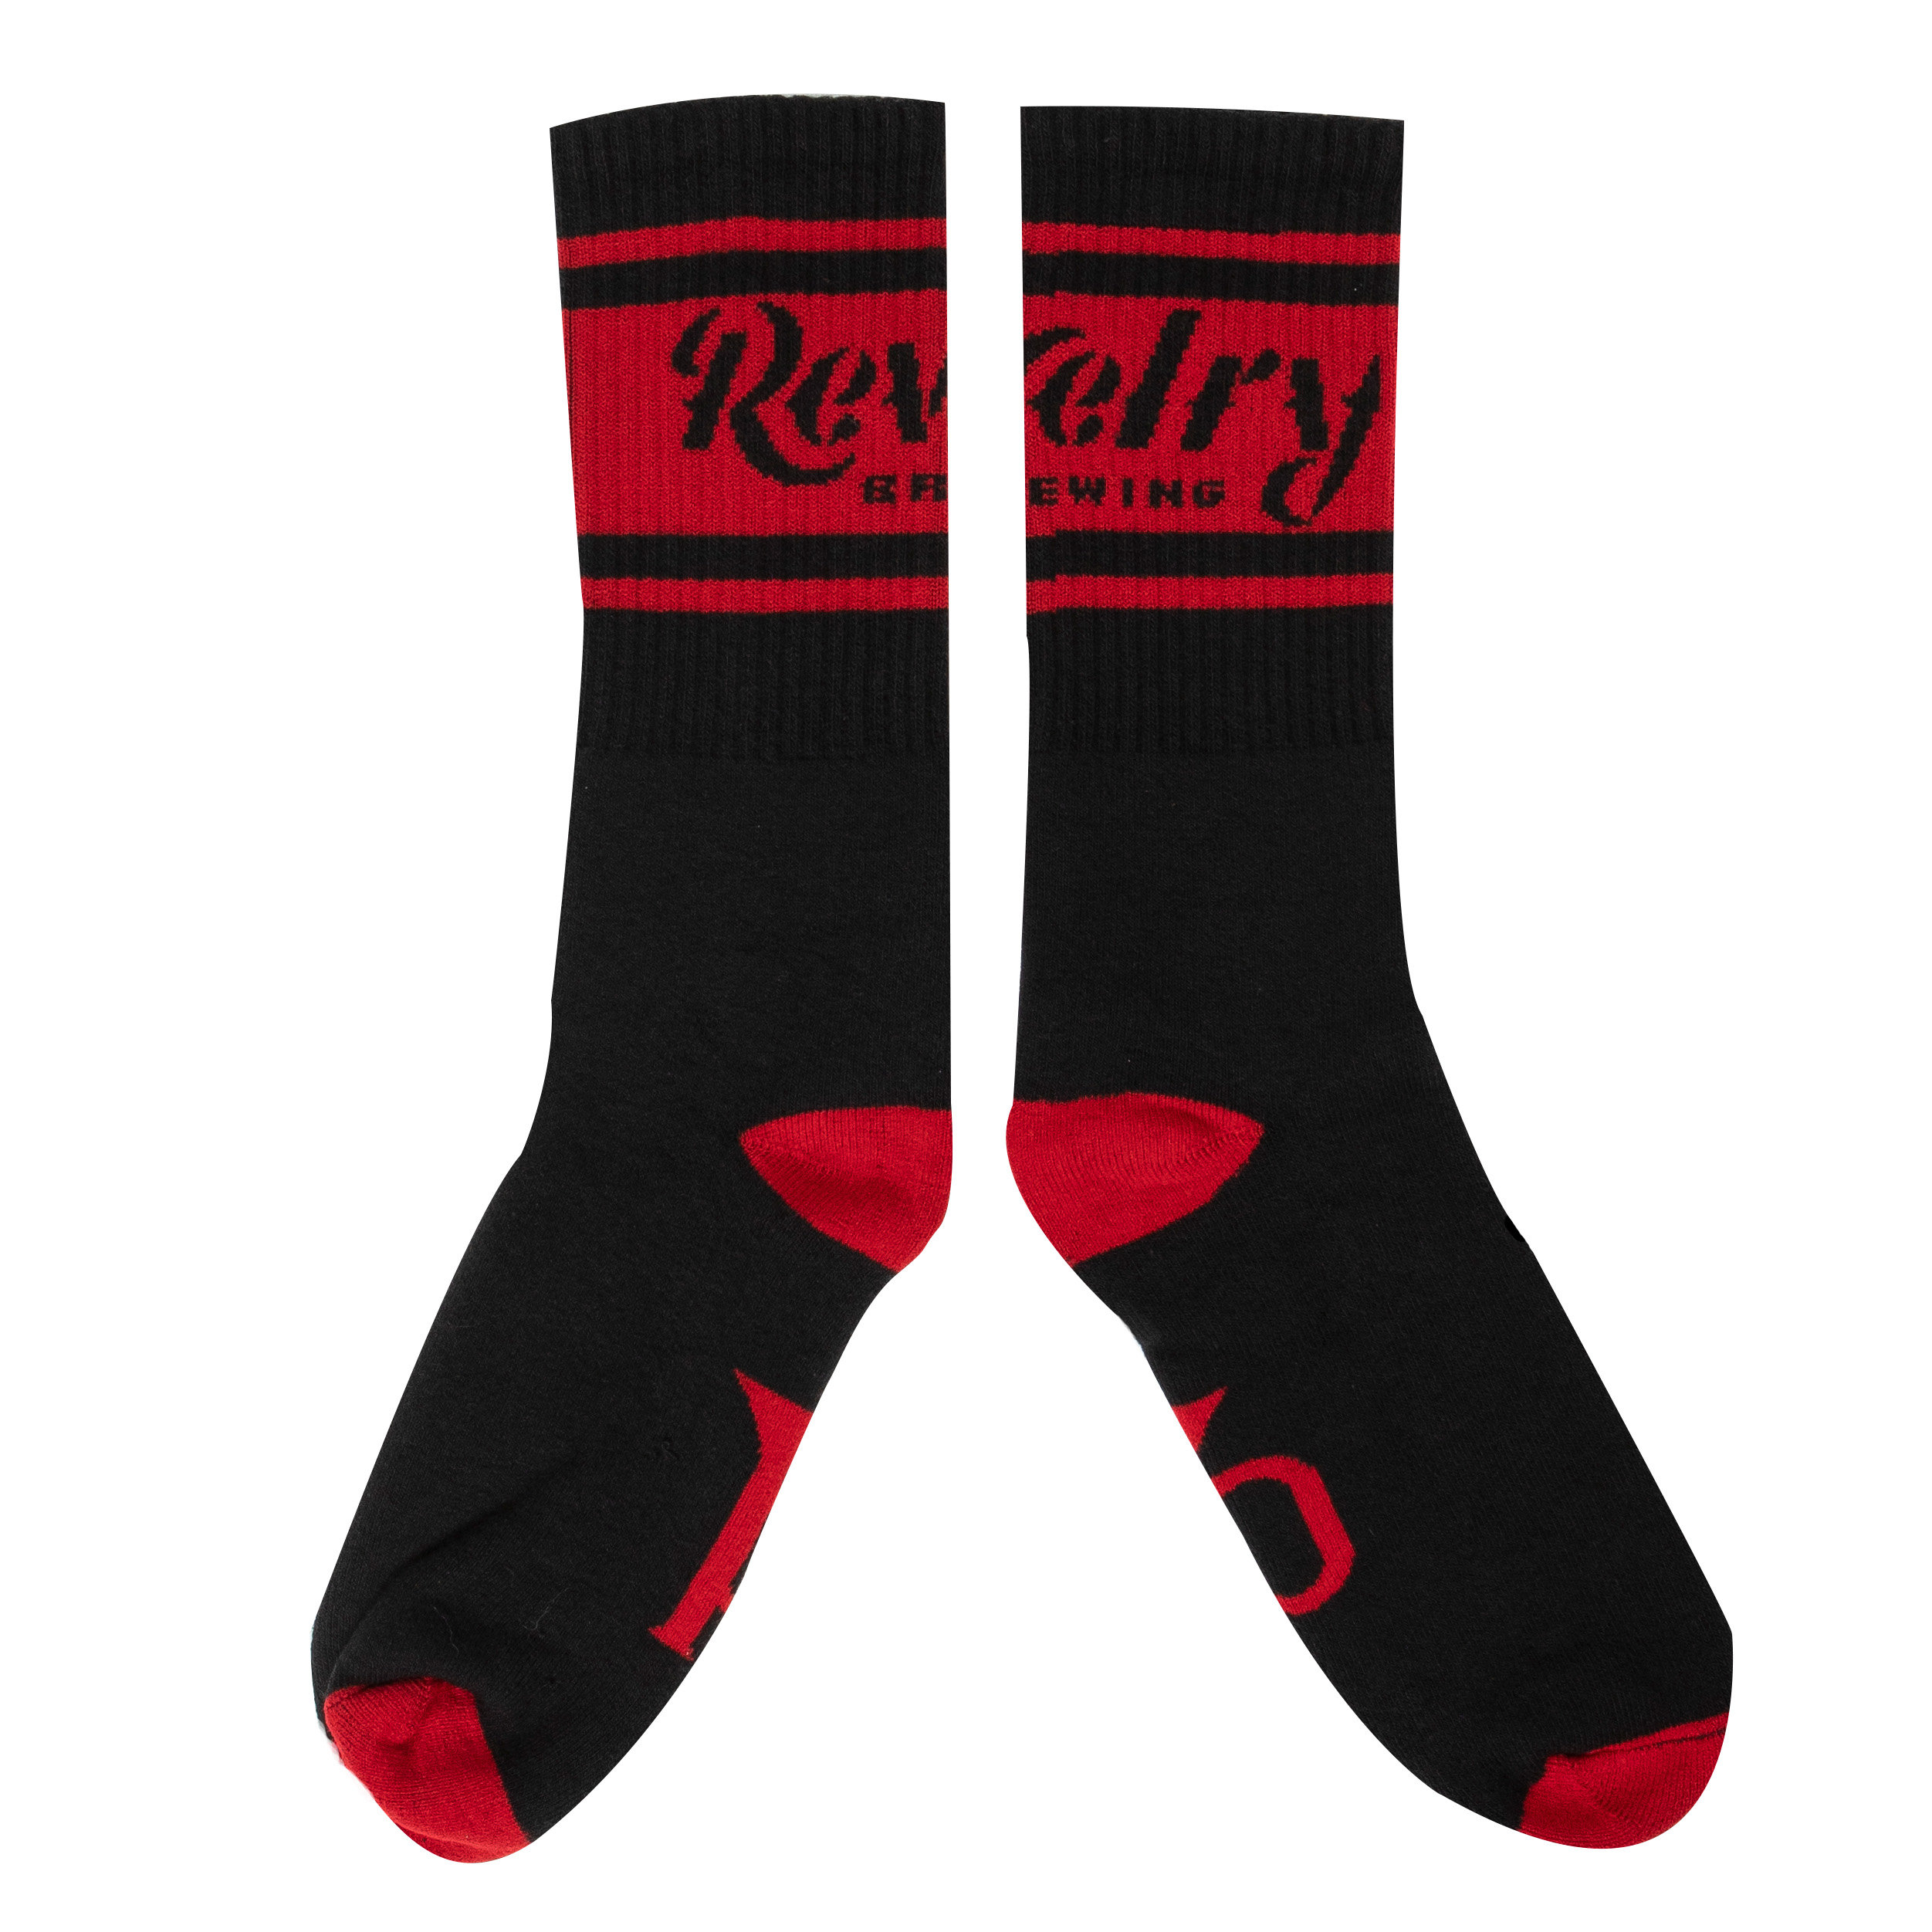 Logo Socks - Revelry Brewing Co.